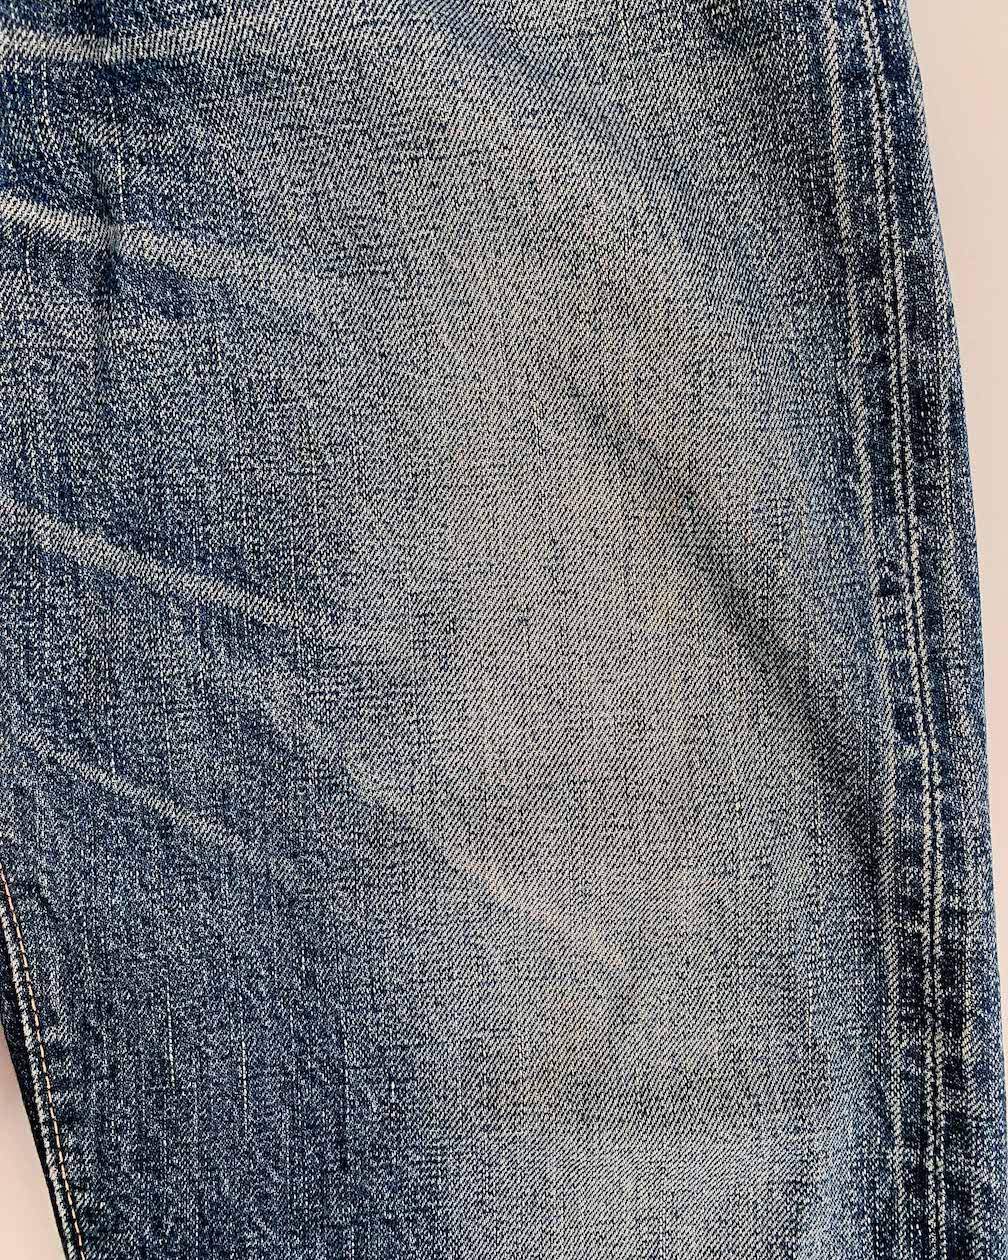 Evisu Paris Jeans (W30) – Source of Heat